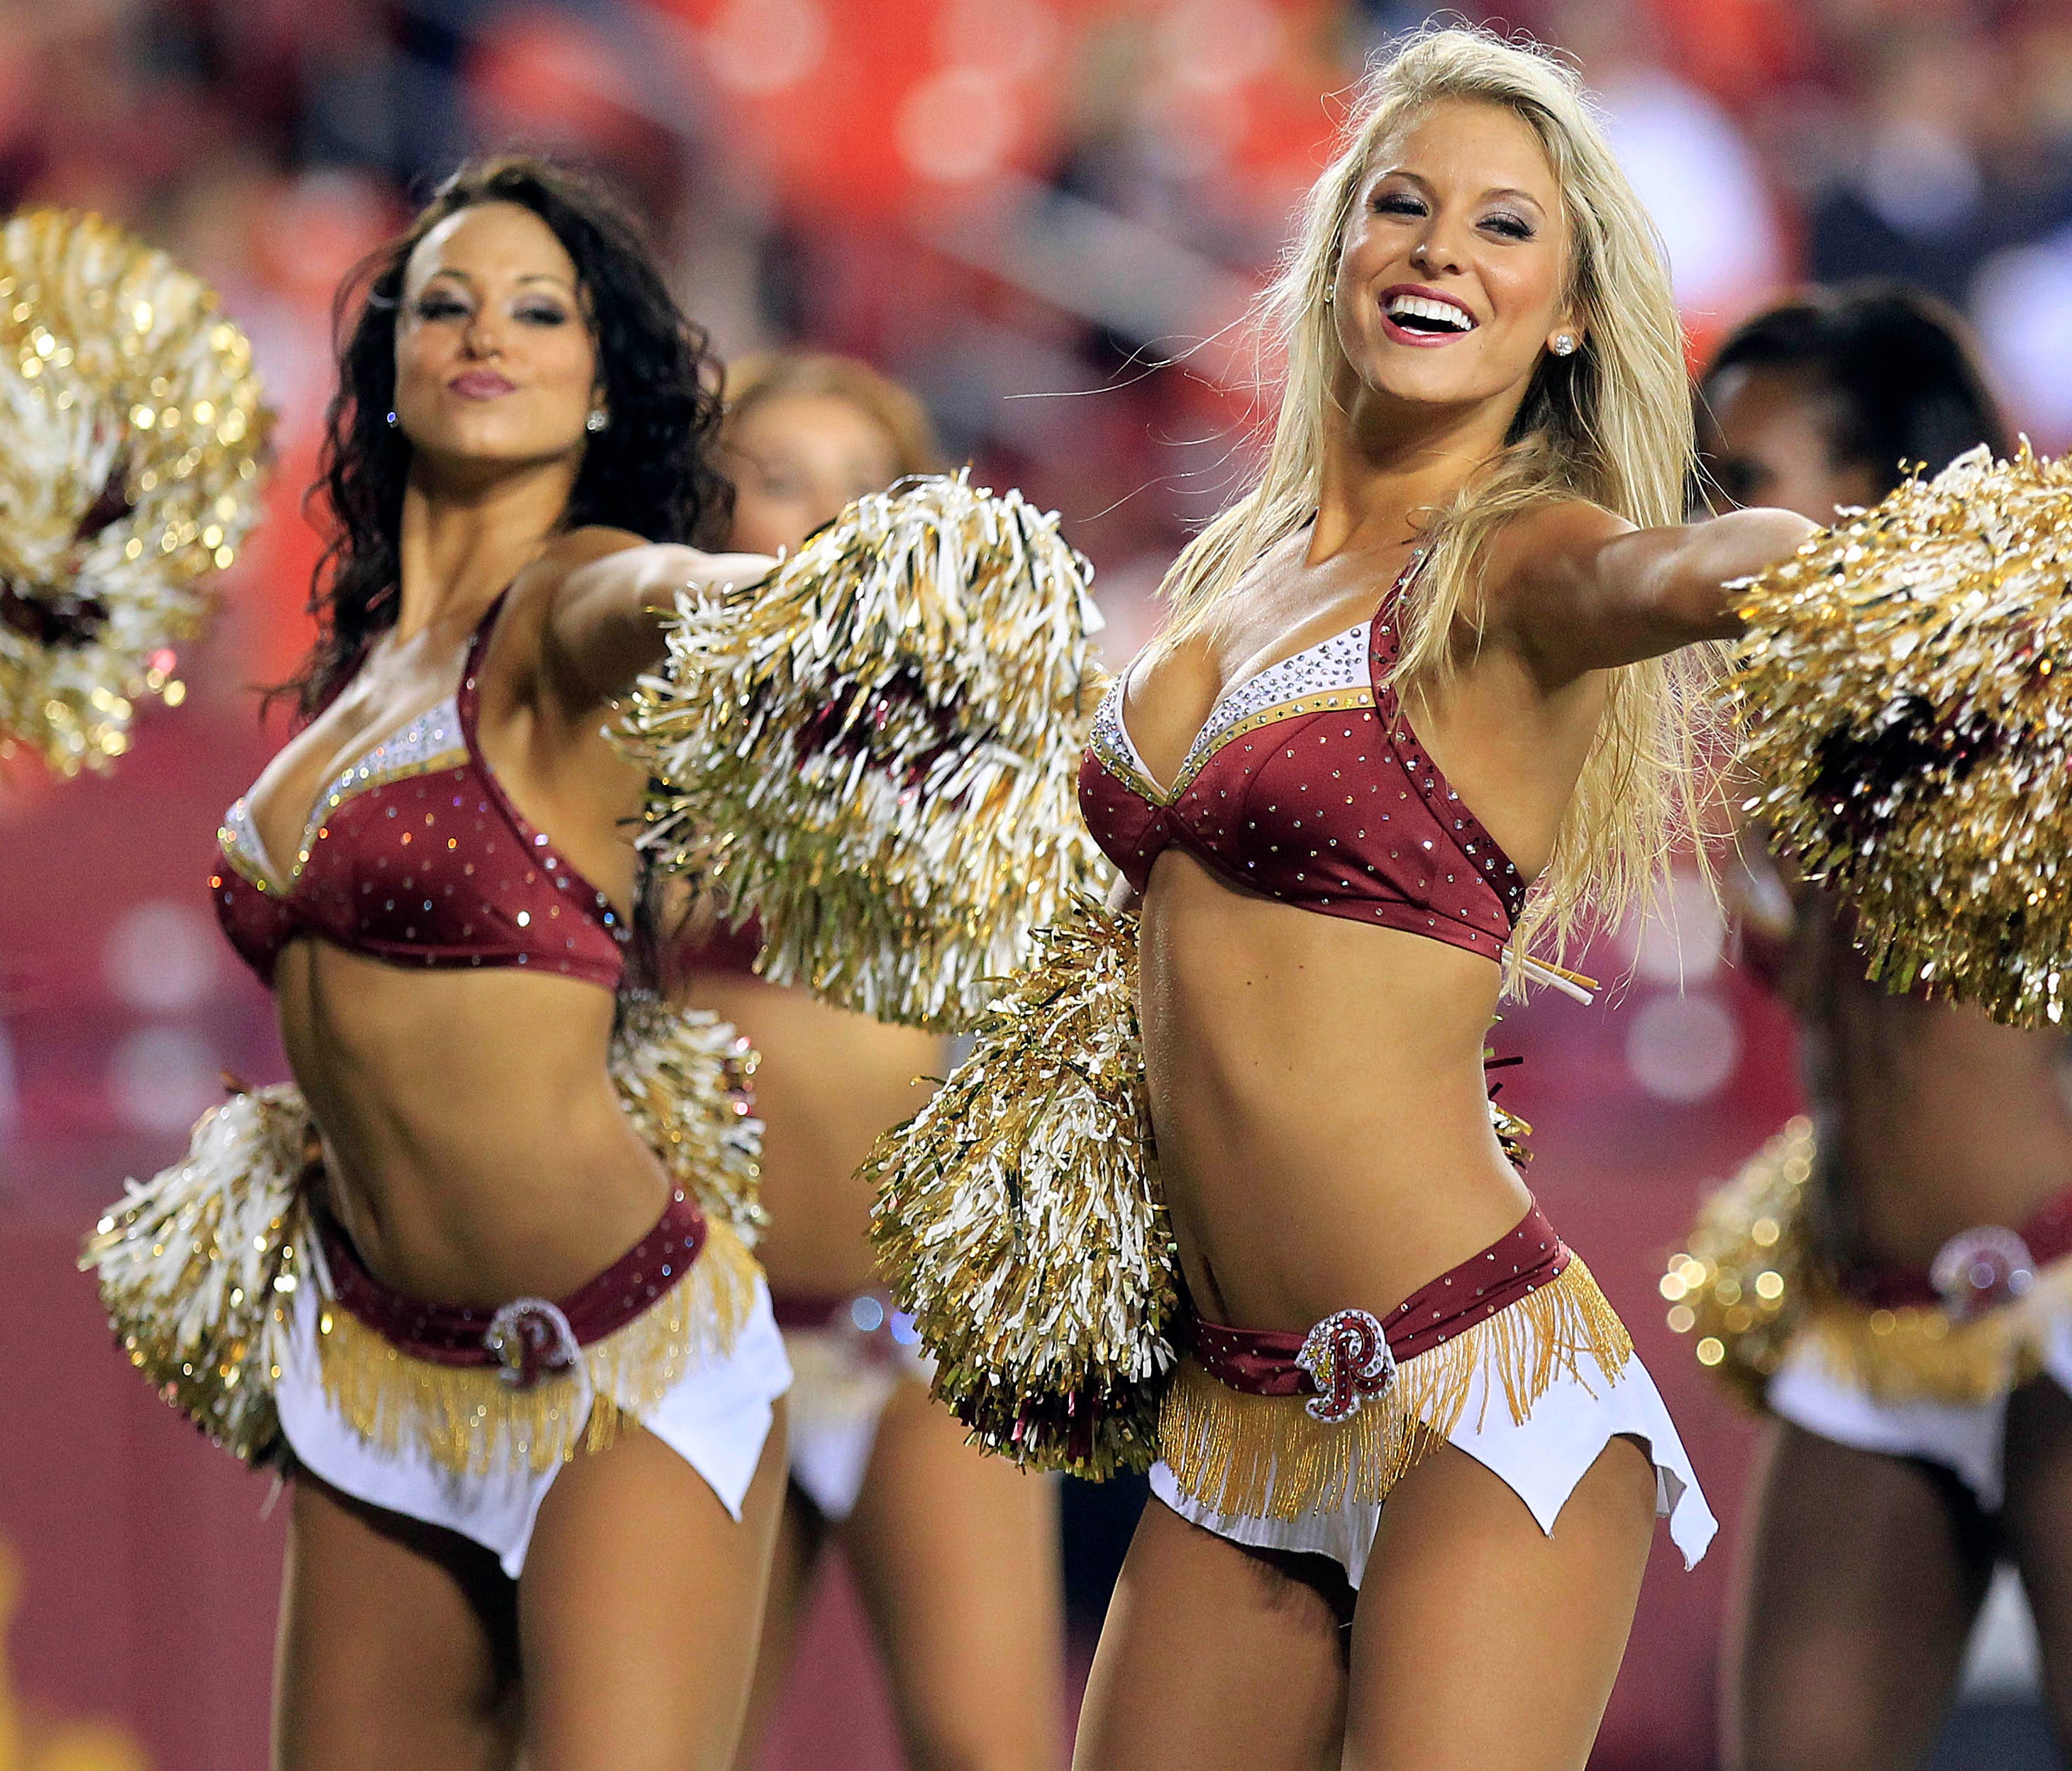 Washington Redskins cheerleaders perform during a preseason game in 2013 against the Pittsburgh Steelers.